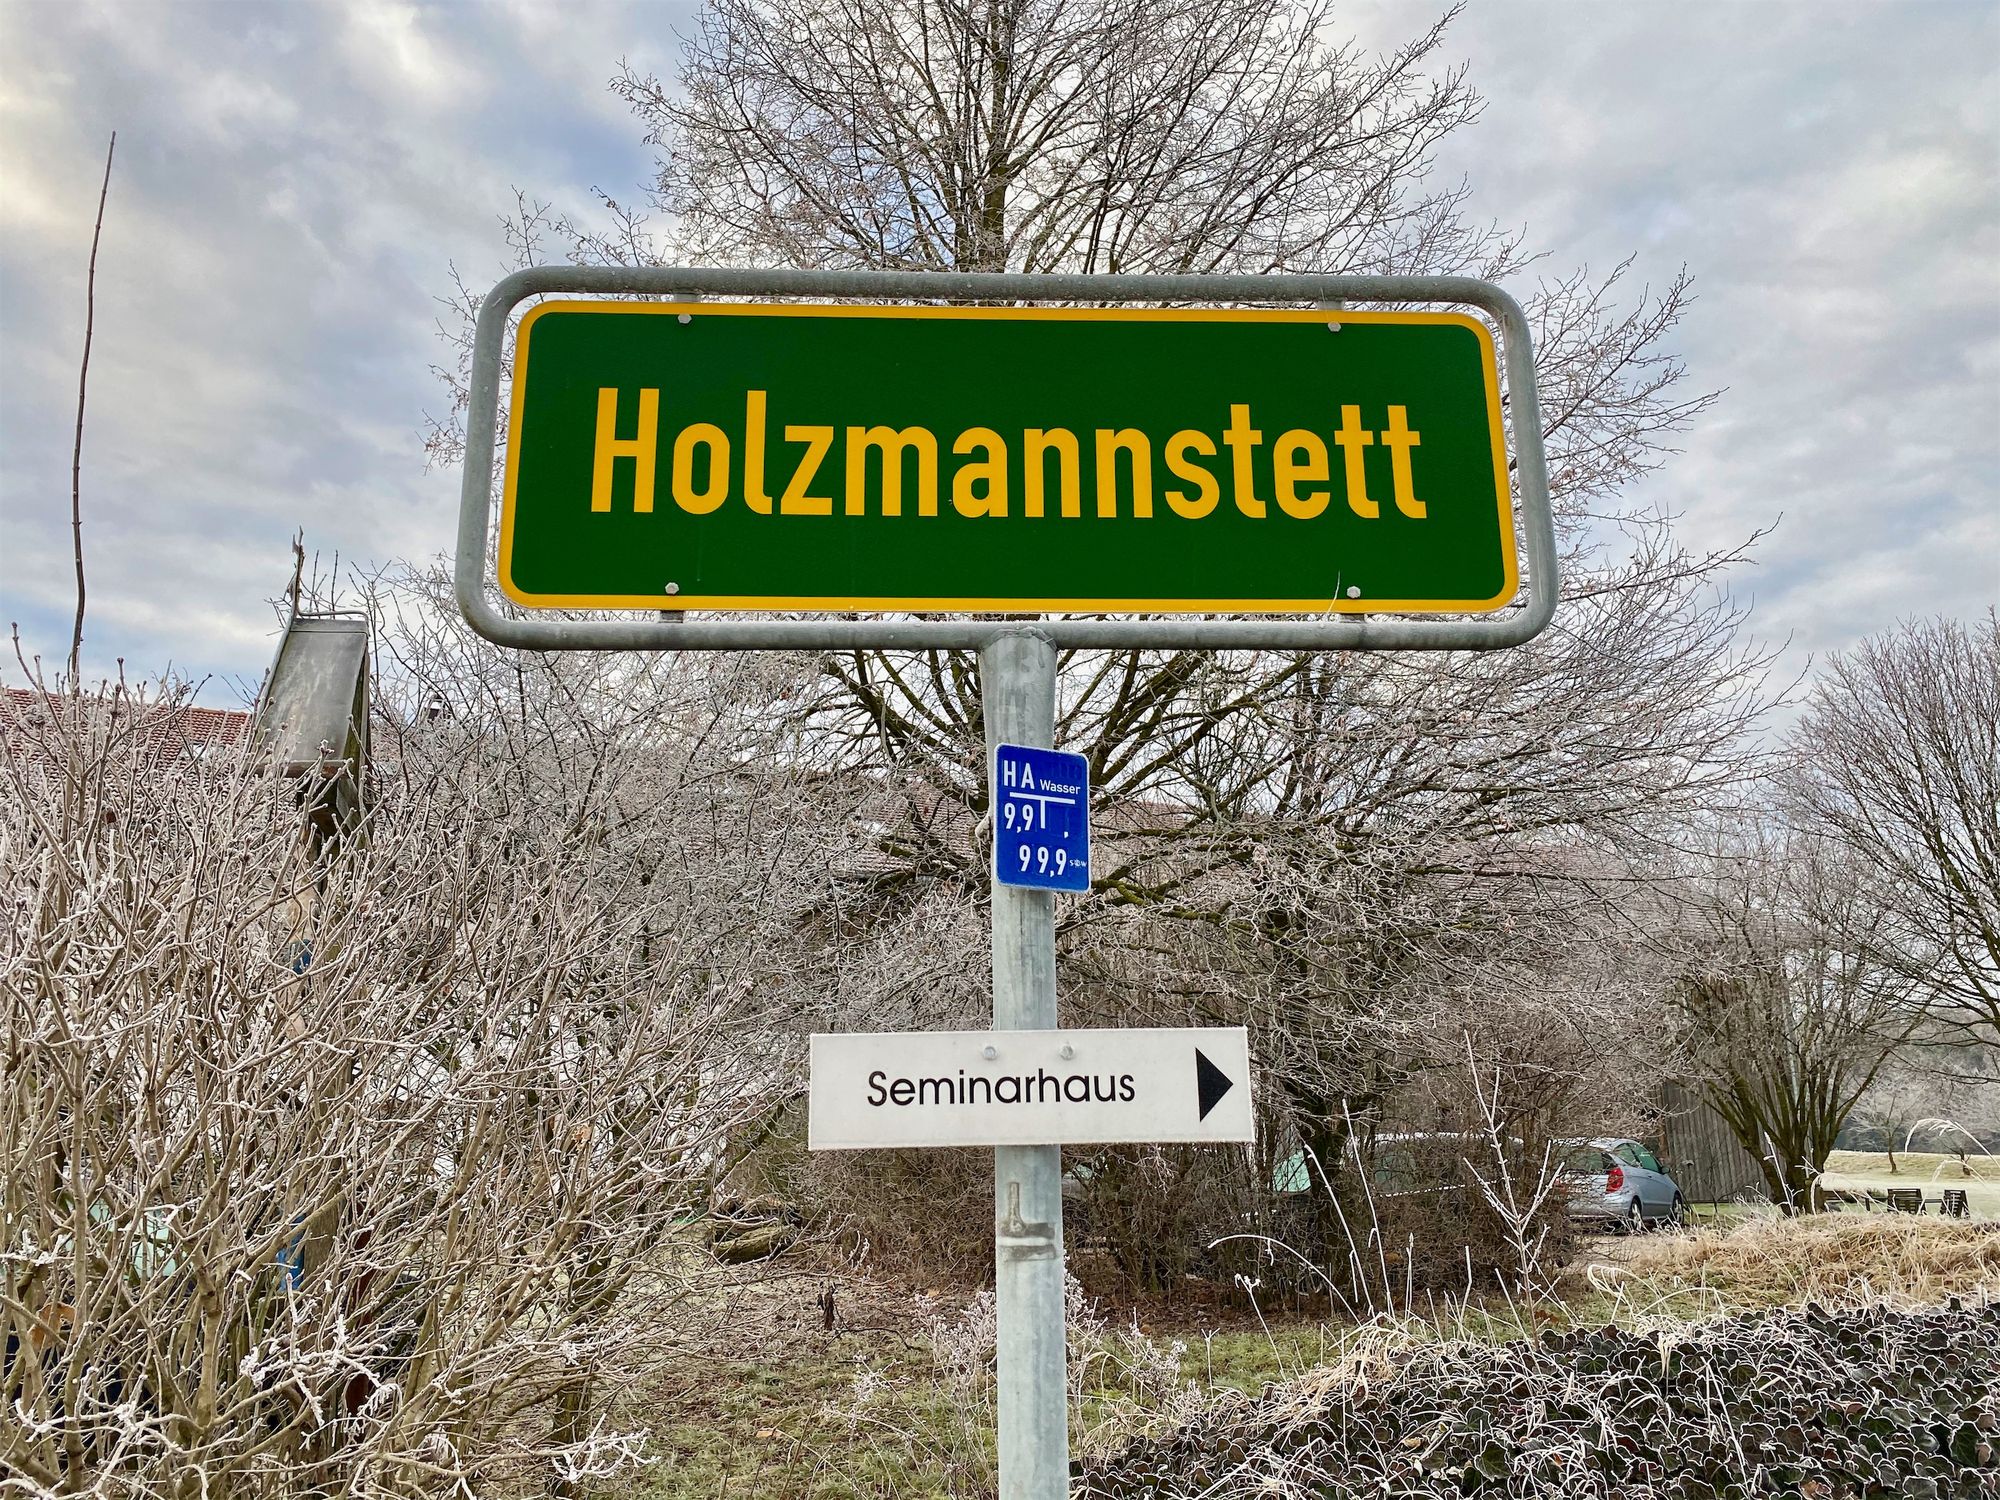 Holzmannstett, Germany